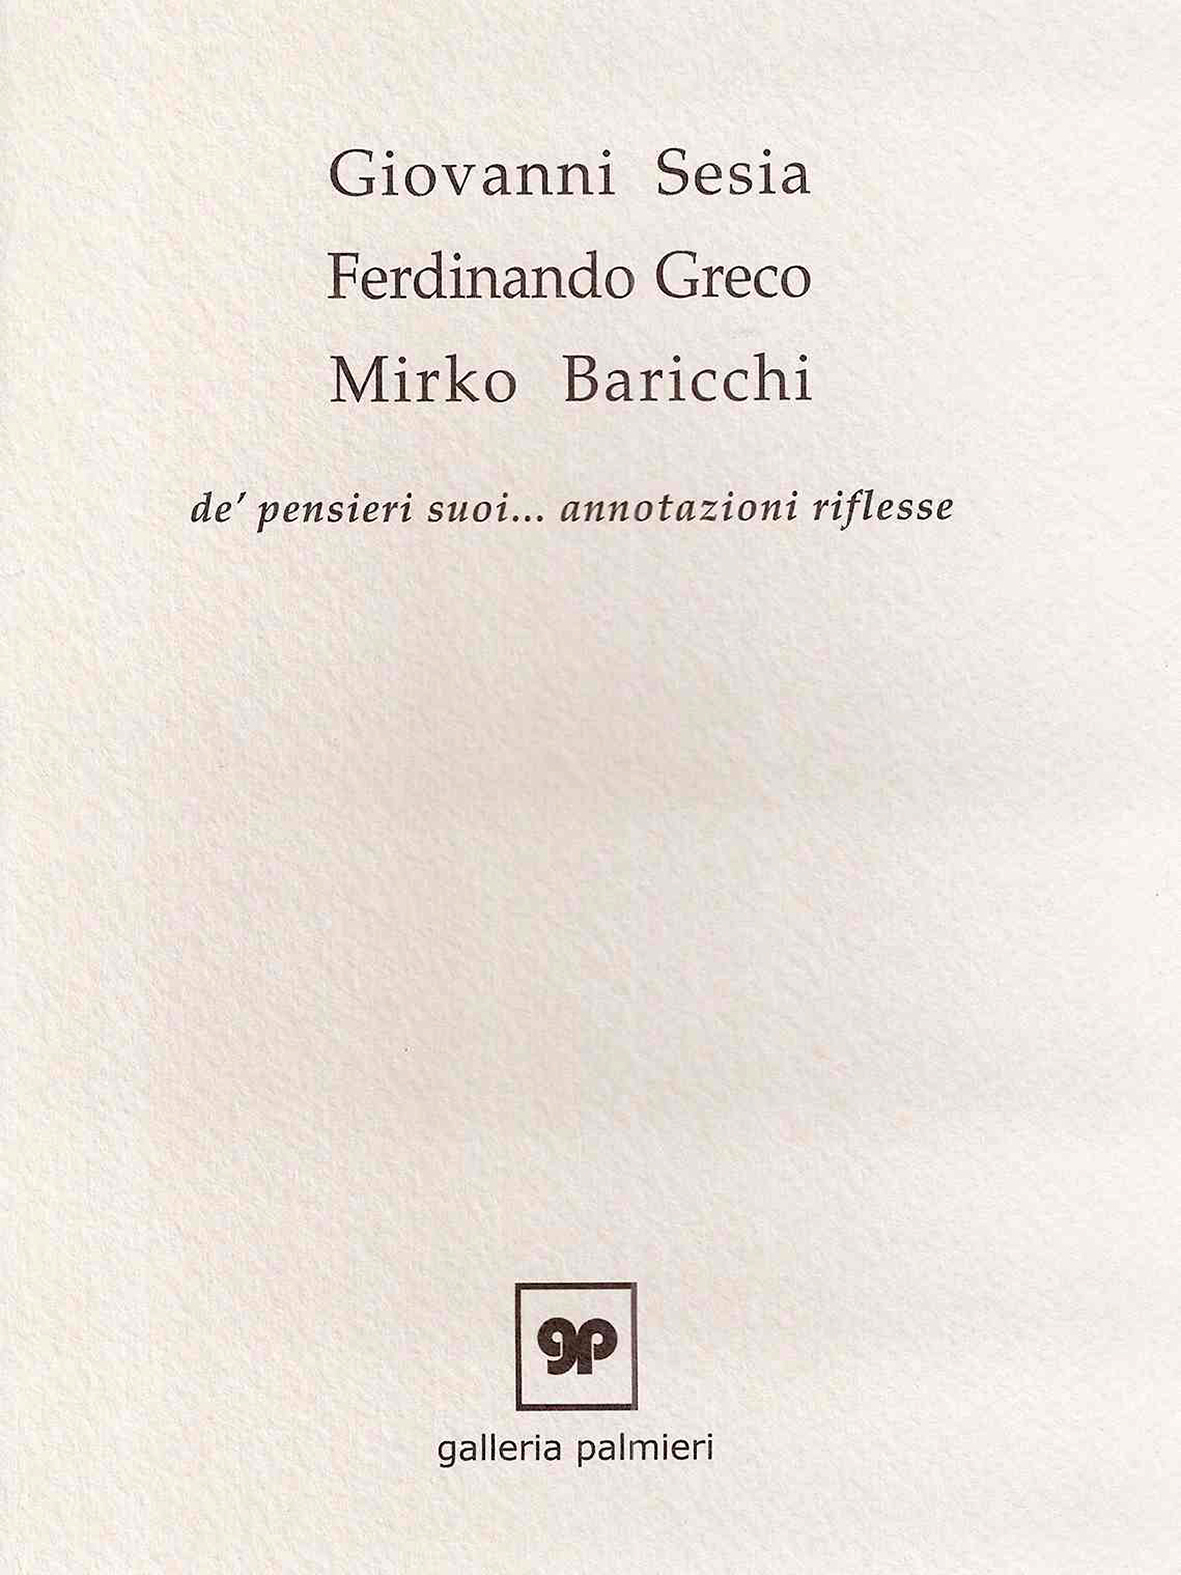 Giovanni Sesia Ferdinando Graco Mirko Baricchi